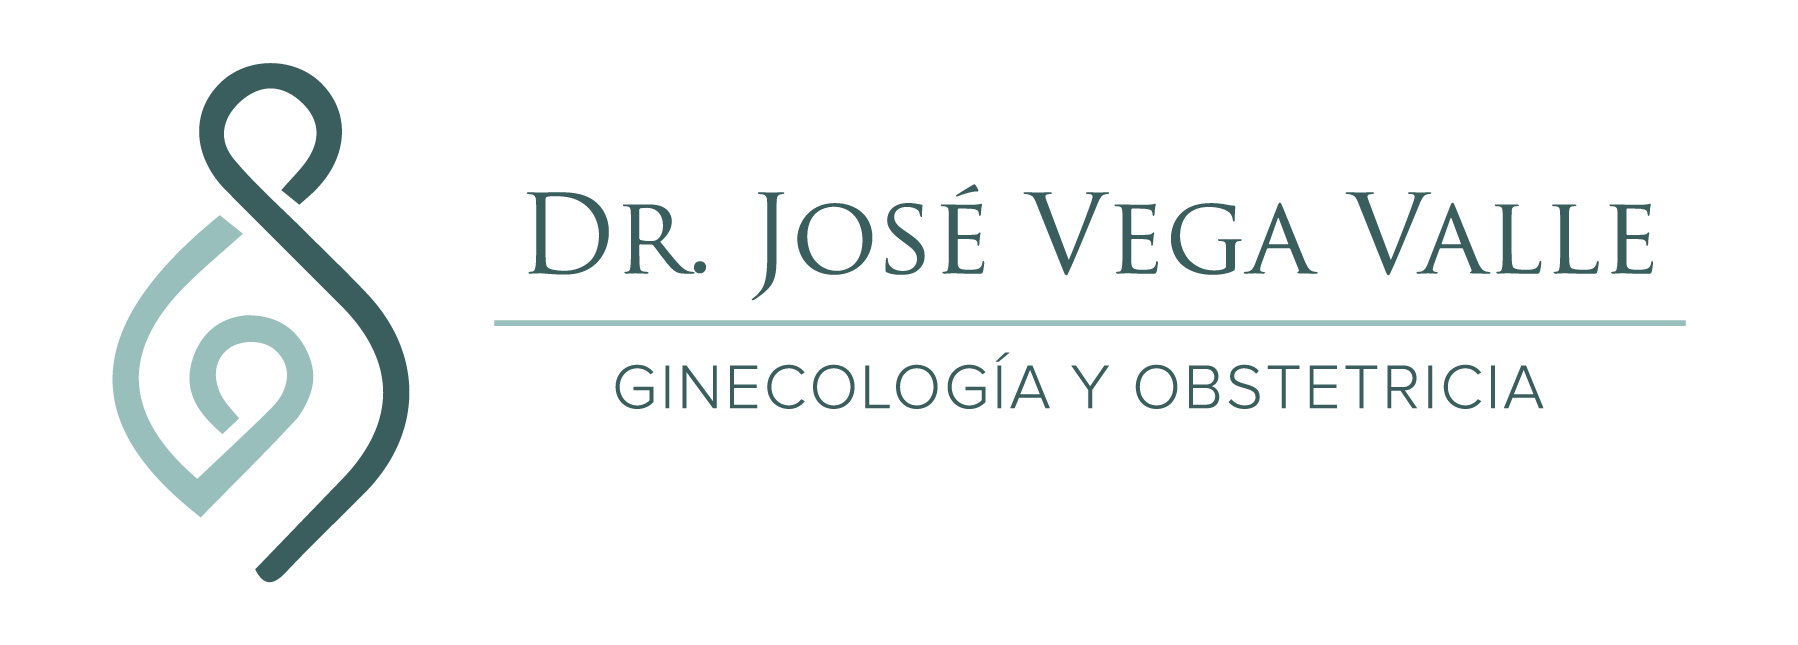 Dr. Jose Vega